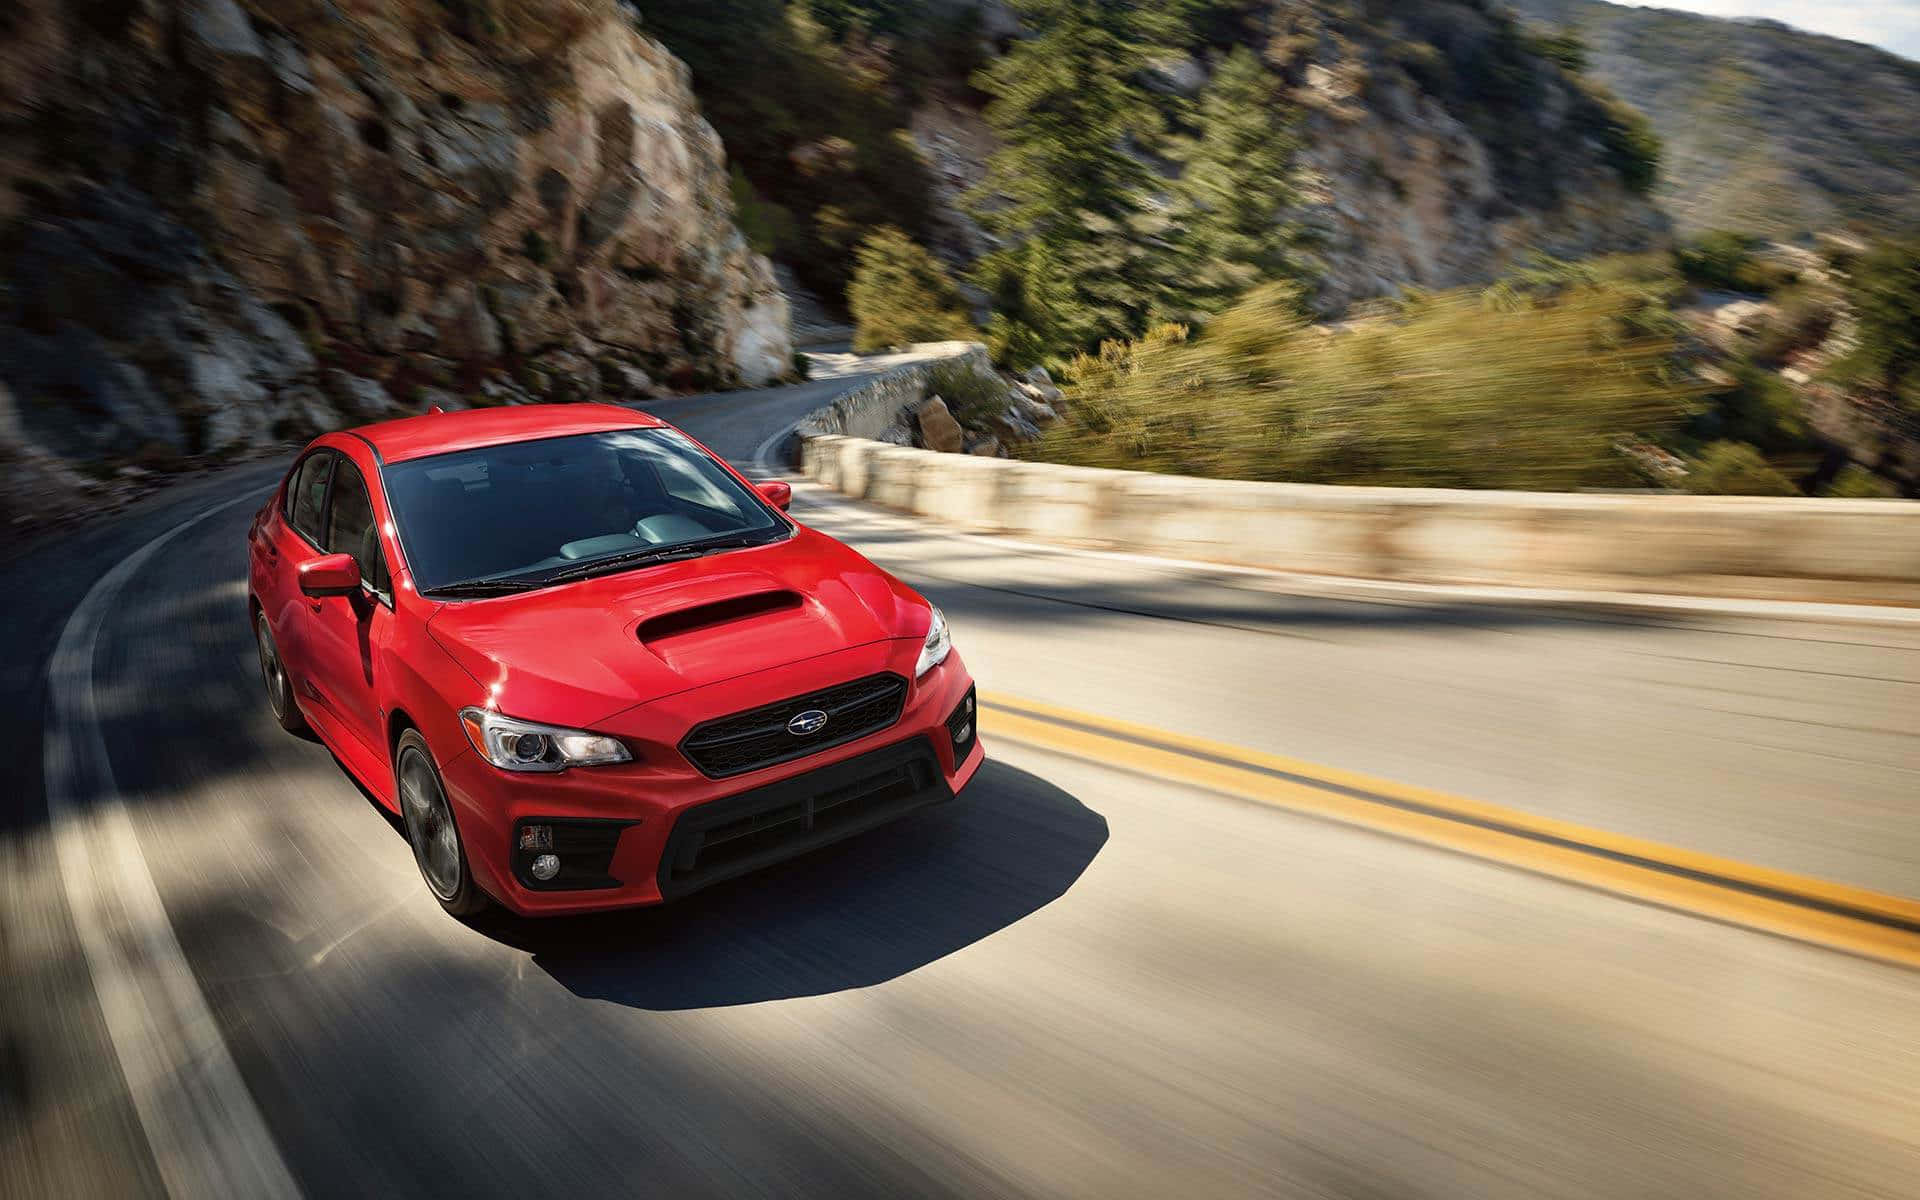 Stunning Subaru Wrx In Action Wallpaper